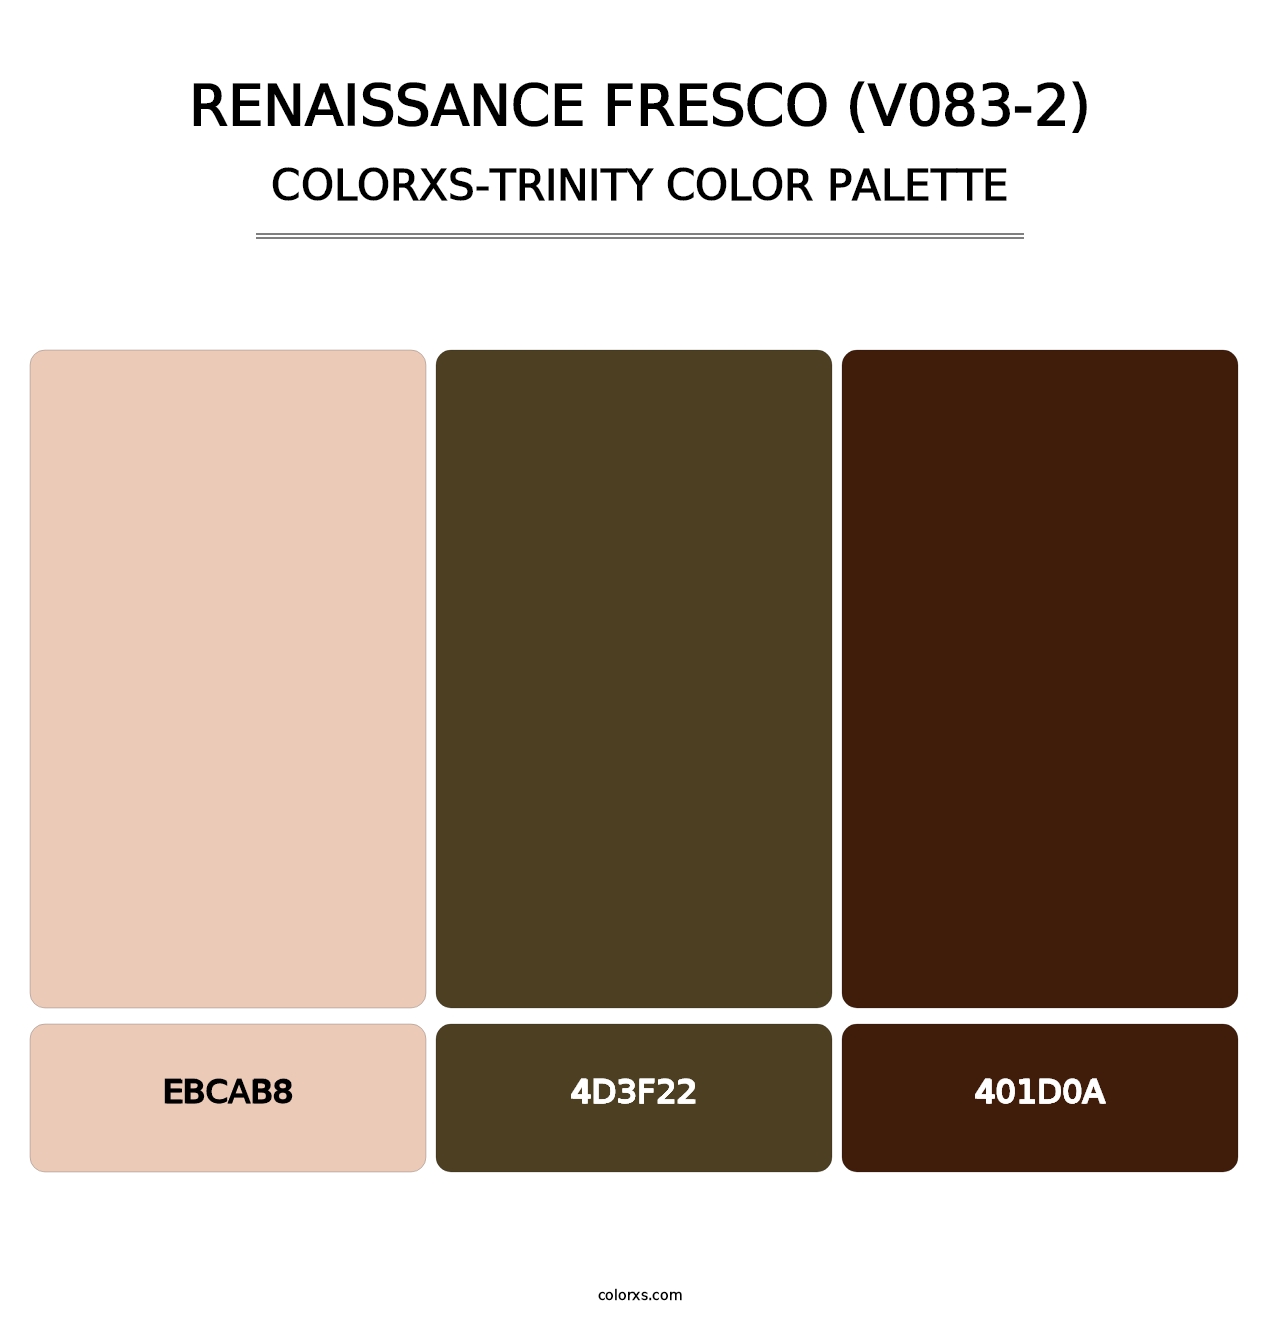 Renaissance Fresco (V083-2) - Colorxs Trinity Palette